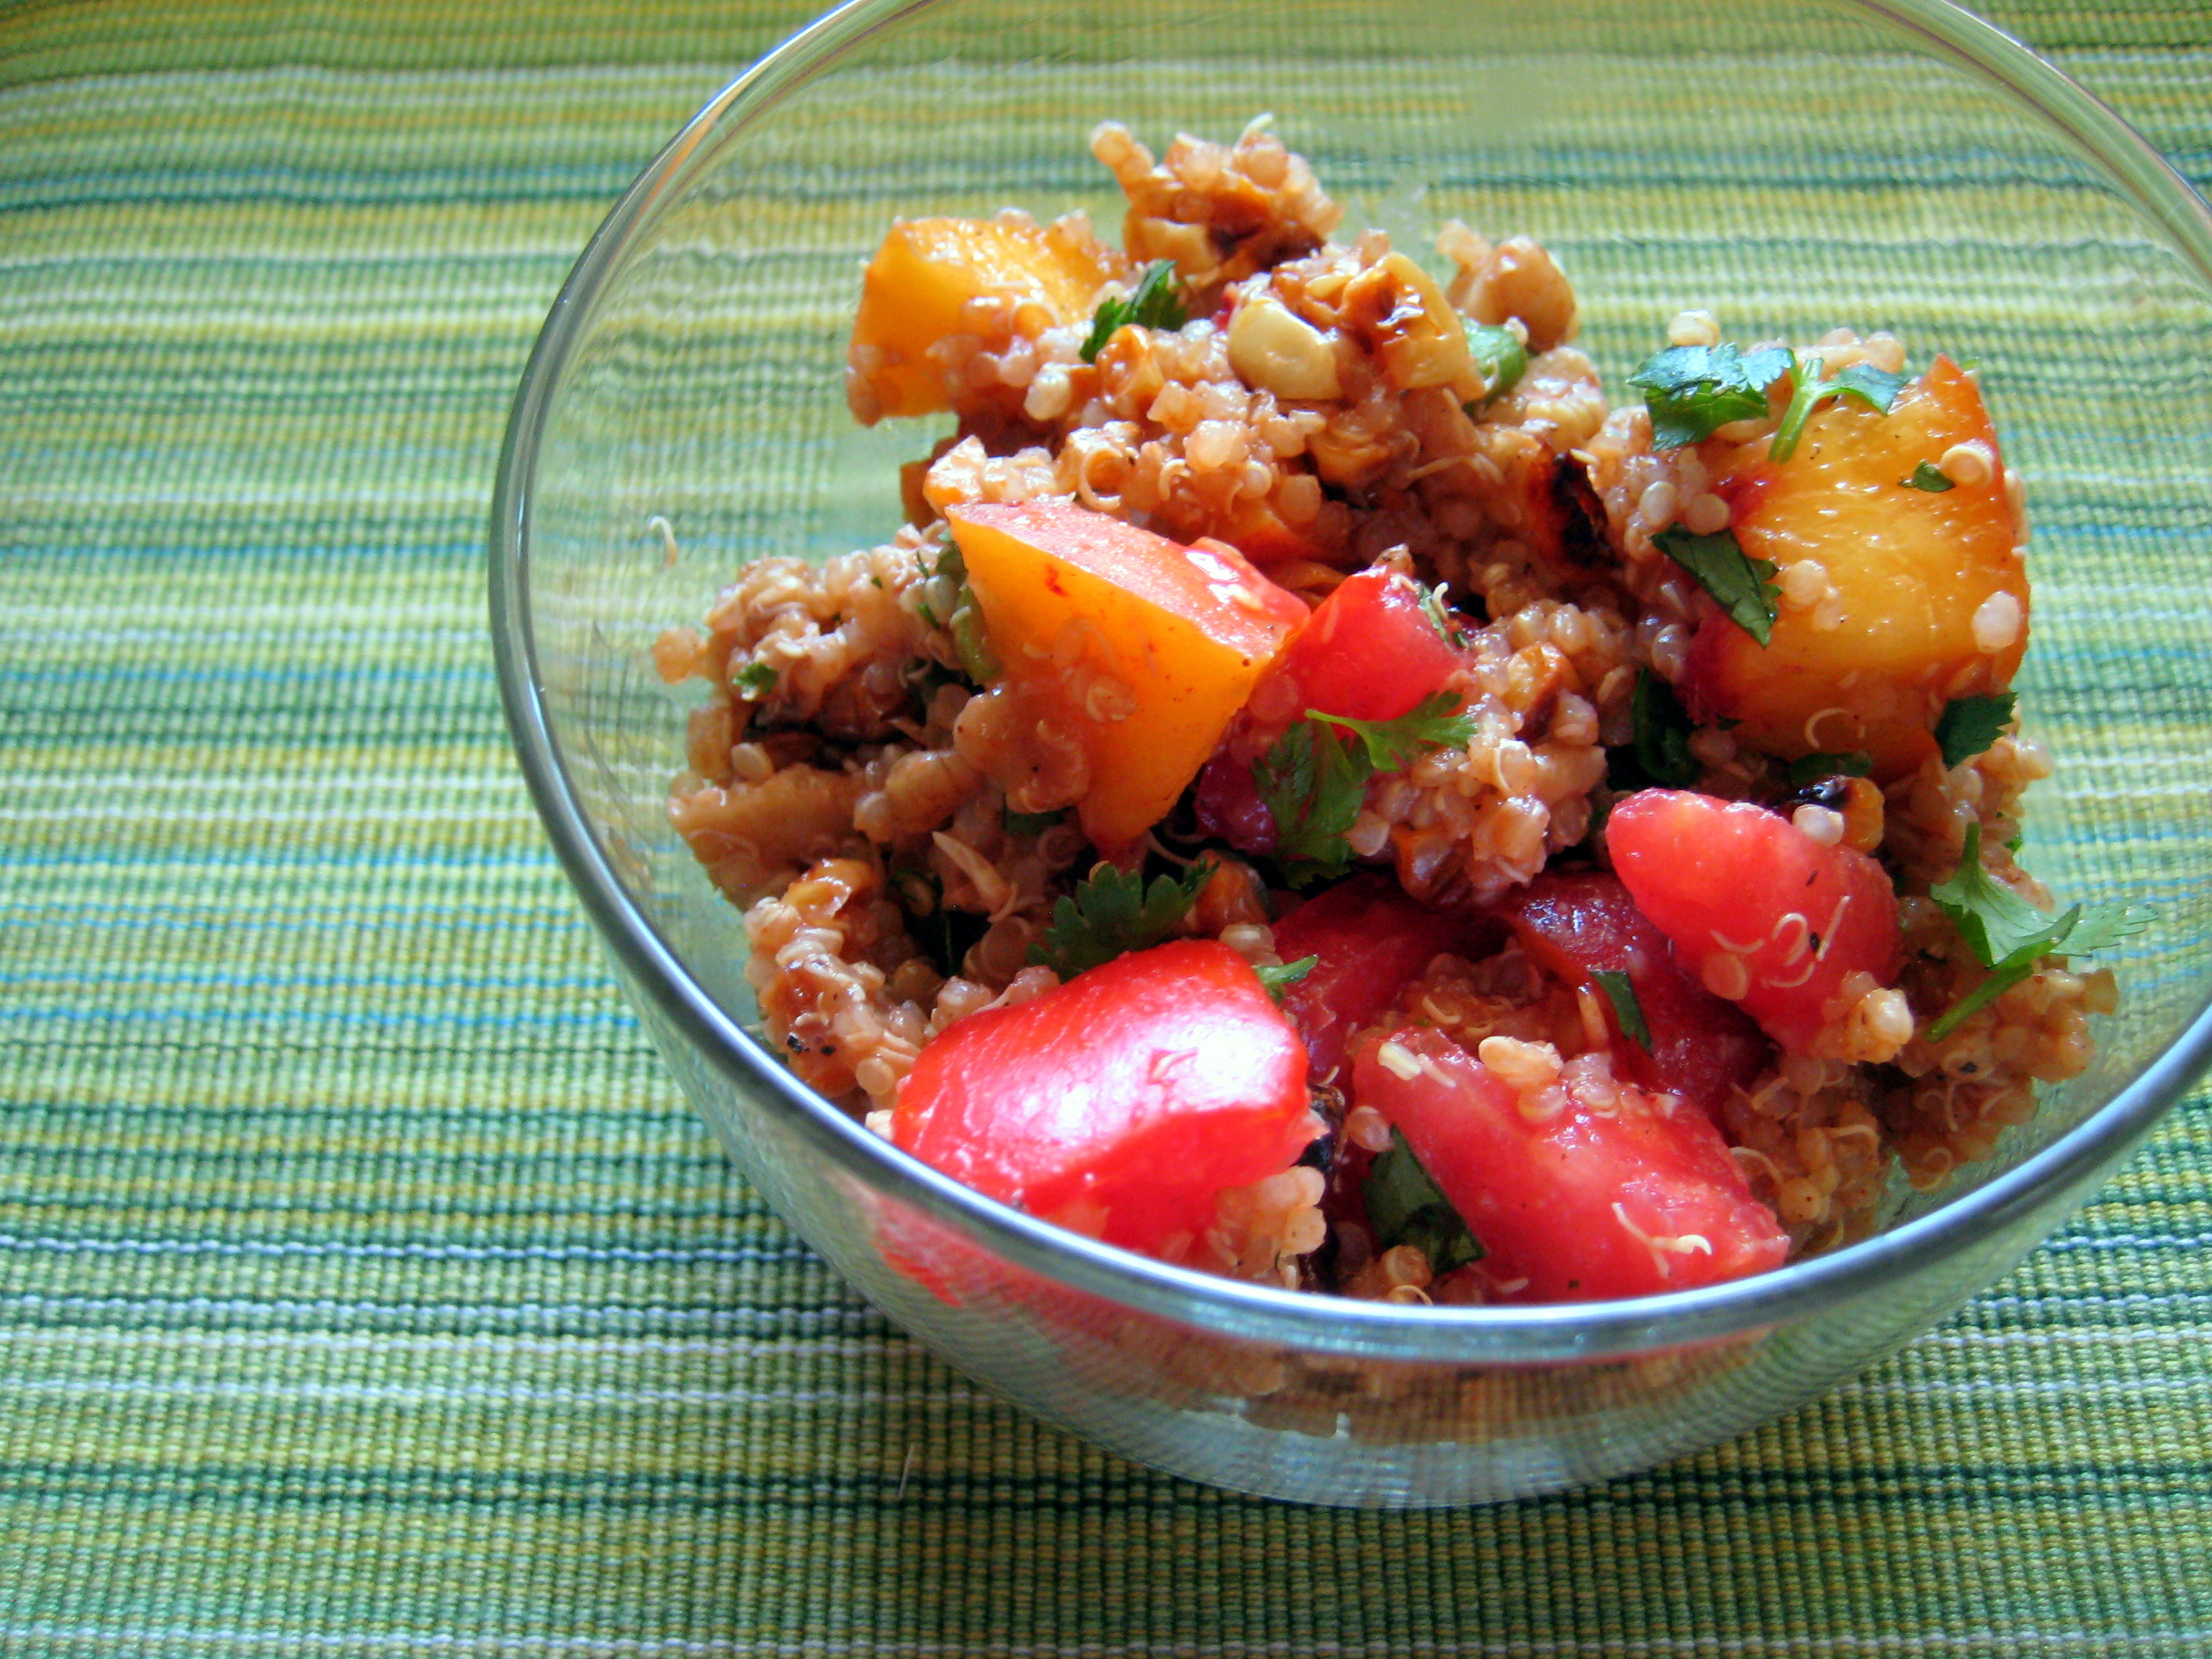 vegan barbecue quinoa salad with peaches, corn, and tomatoes